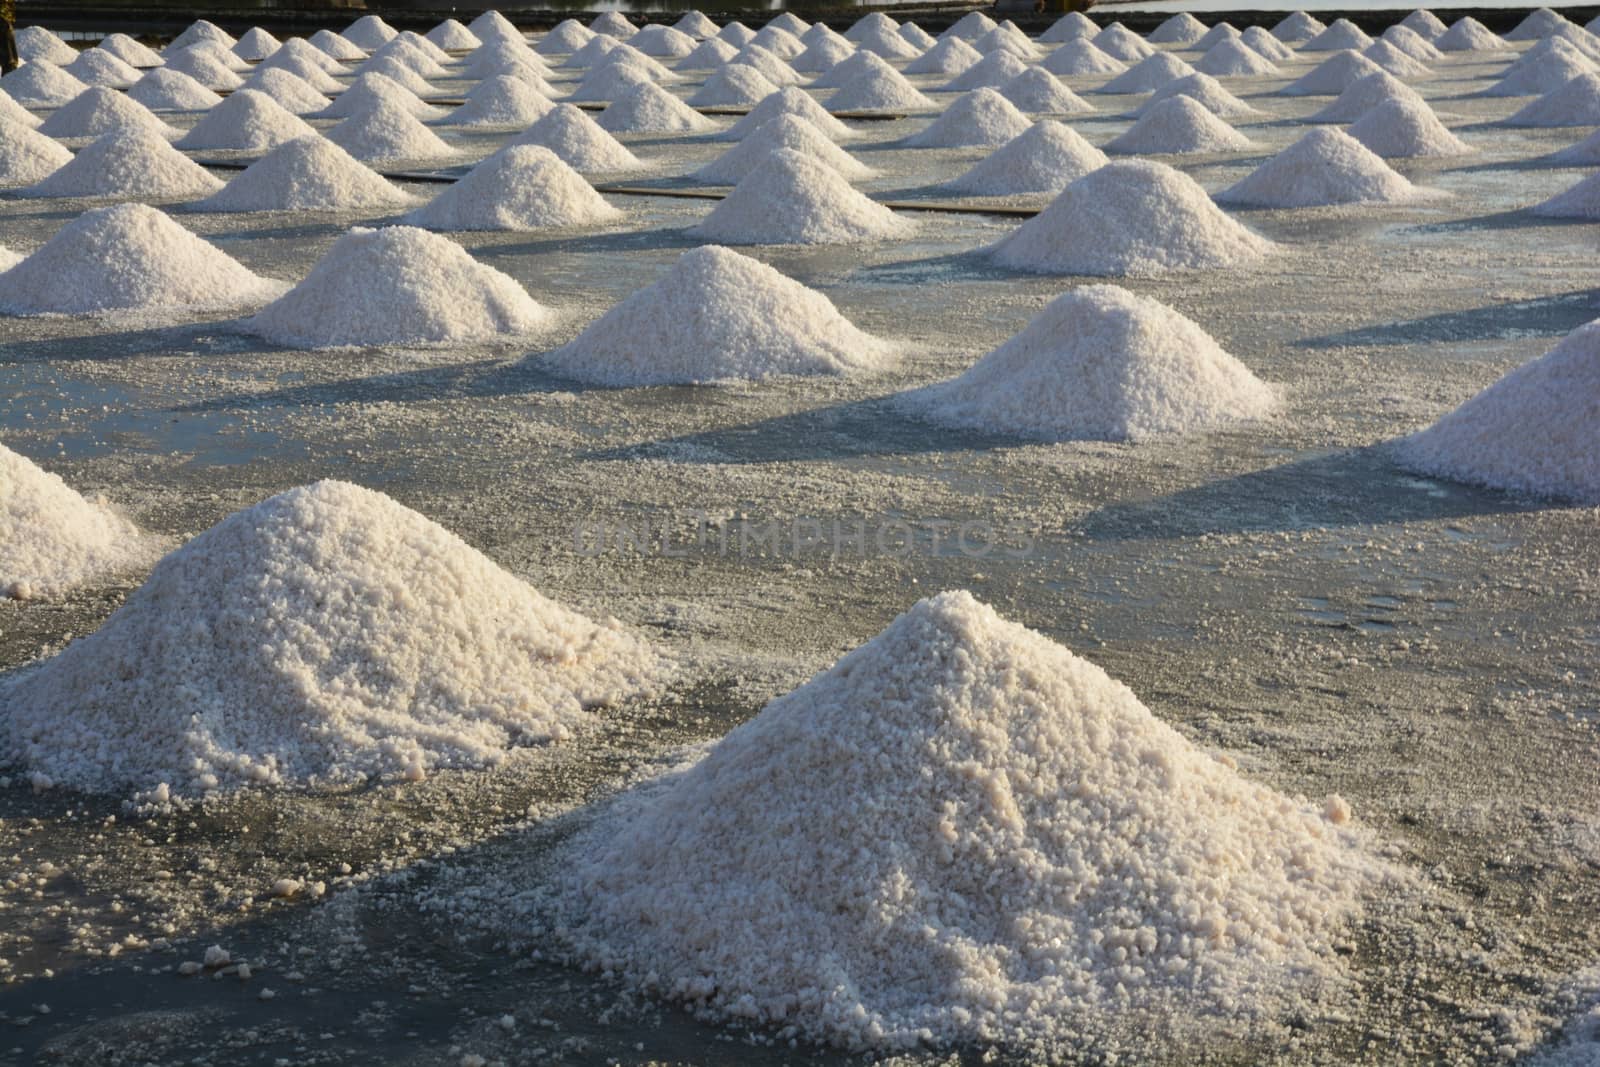 Salt pan or salt field,  Landscape of salt farming field  by ideation90